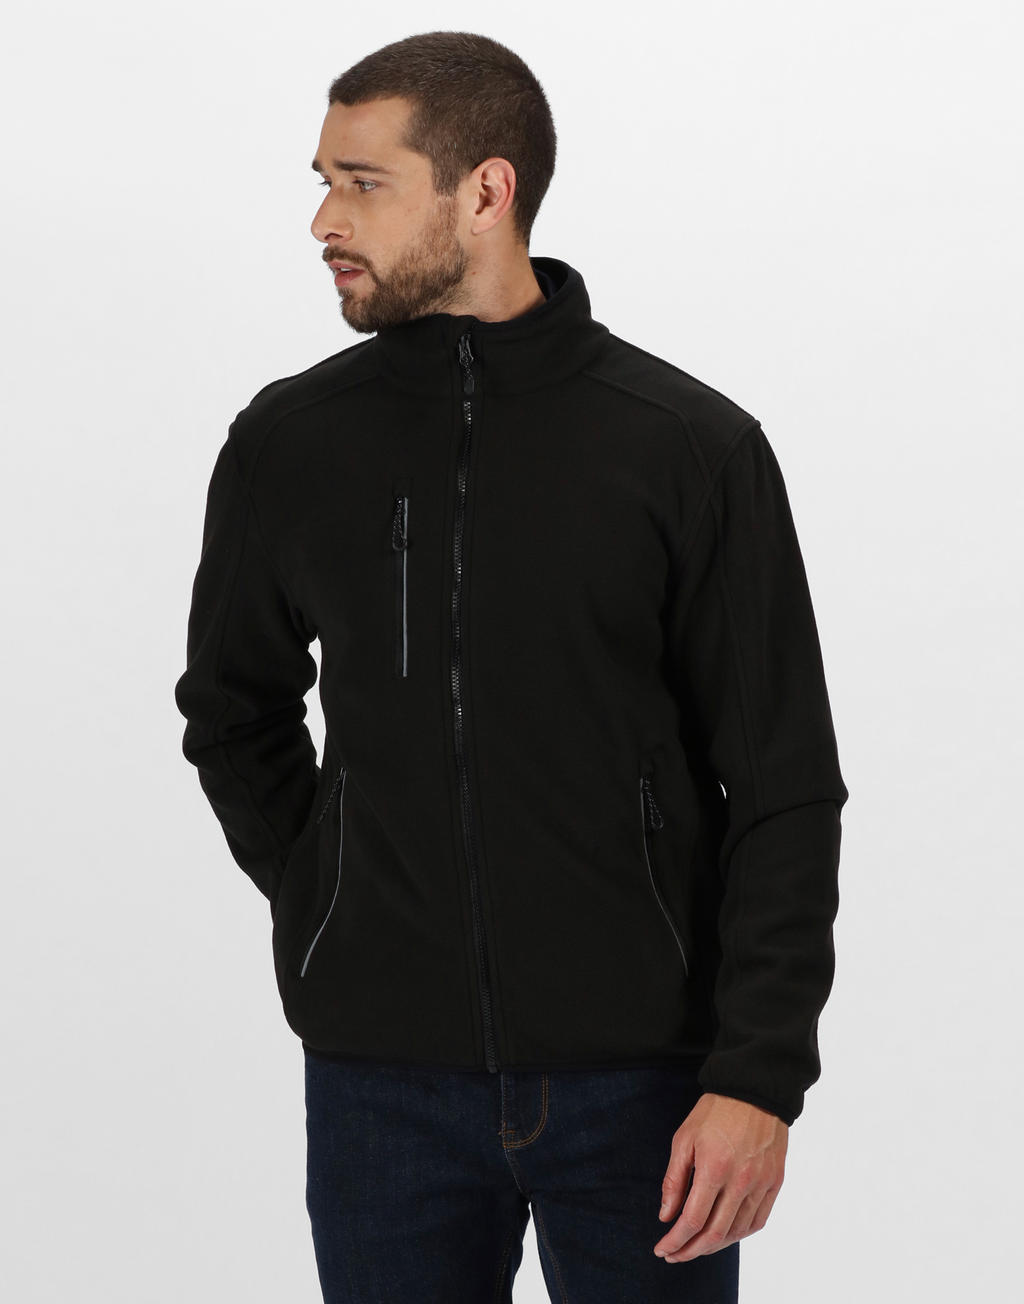  Omicron III Fleece Jacket in Farbe Black